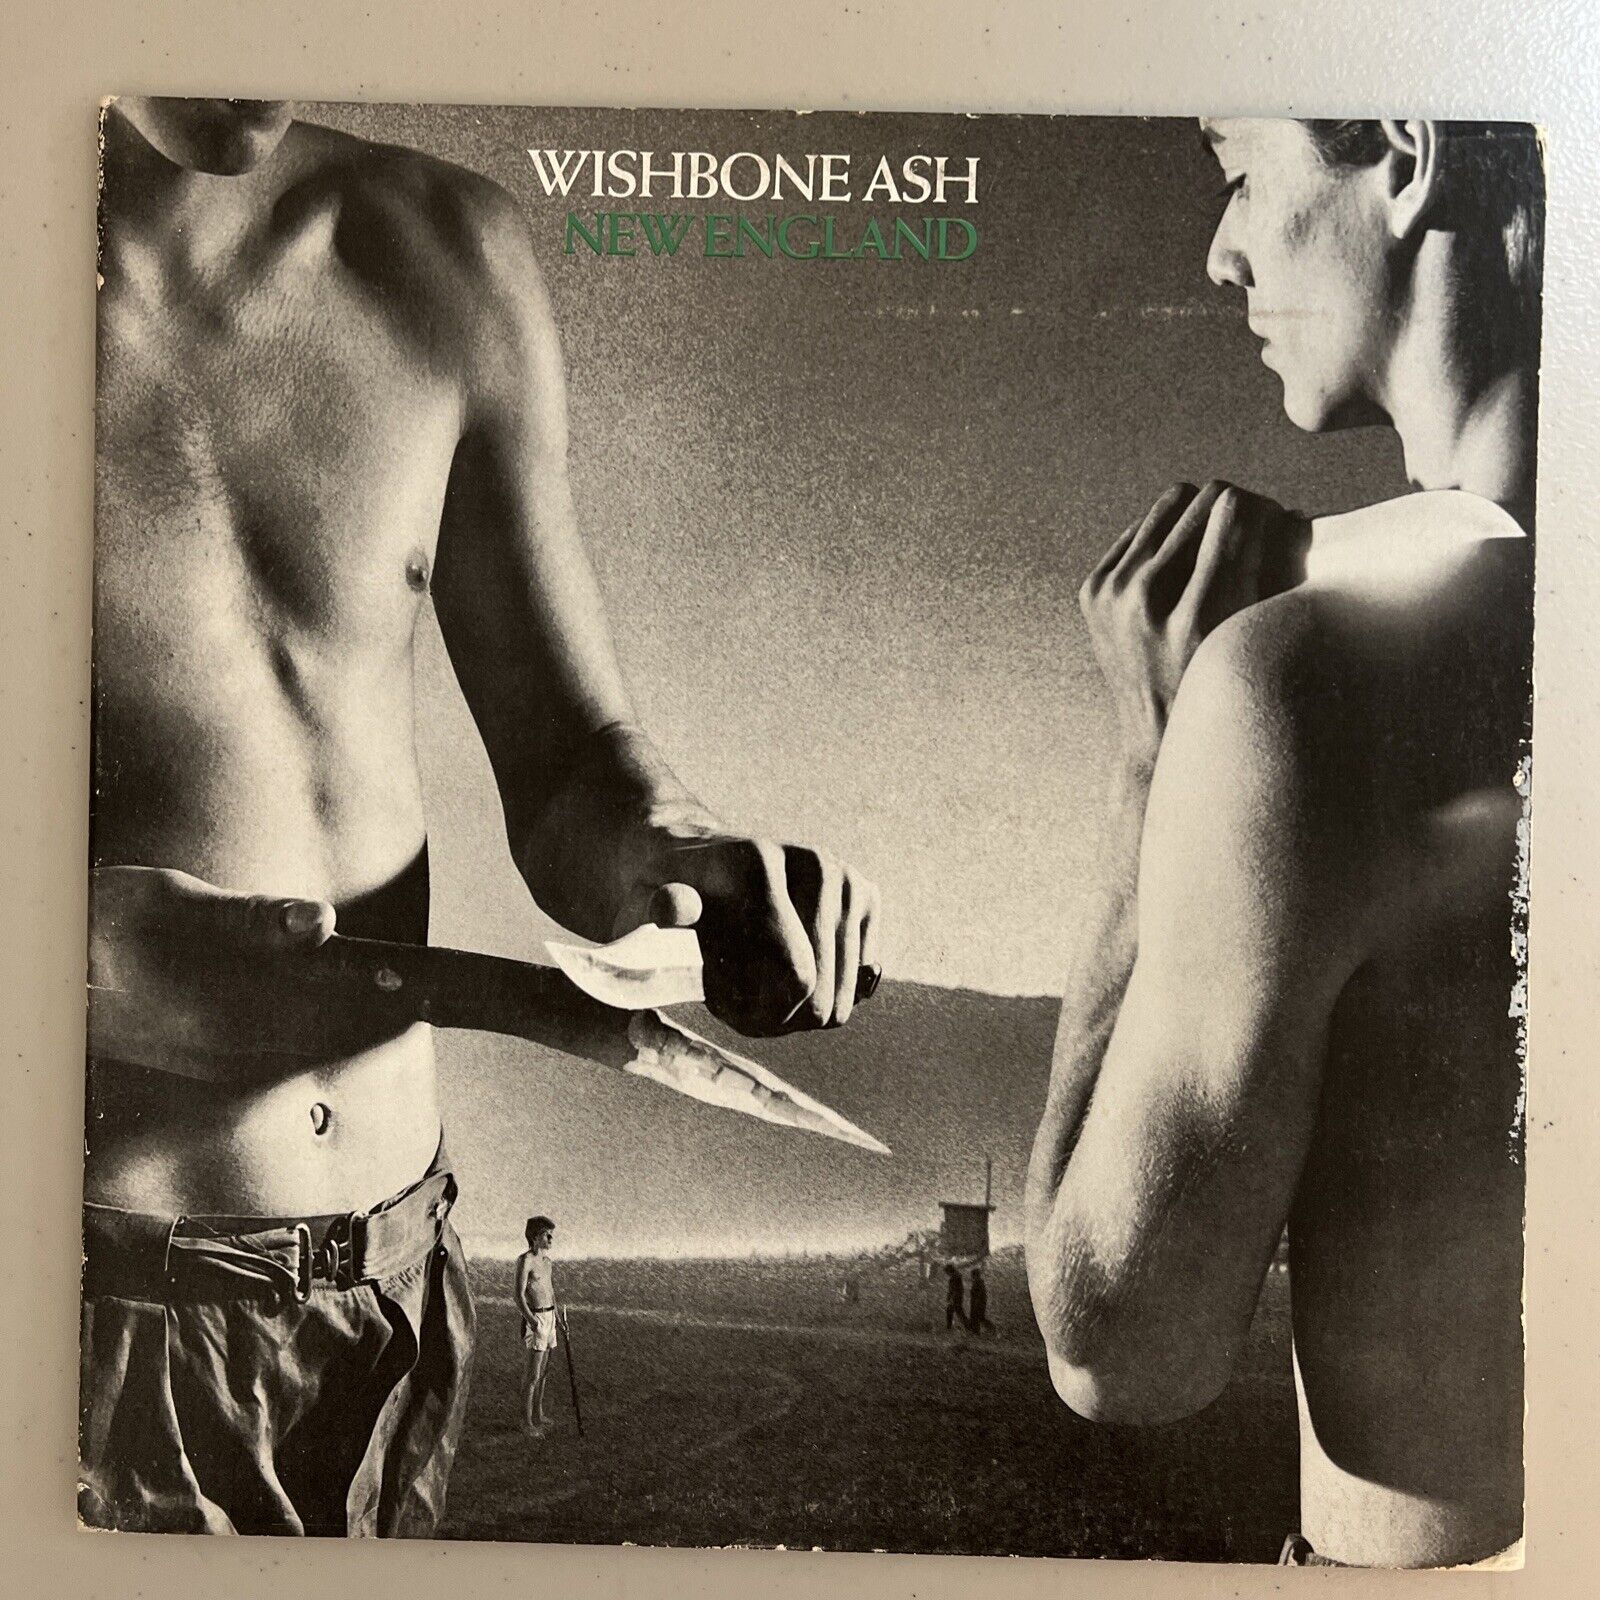 Wishbone Ash - New England - Atlantic SD-18200, VG+/VG Vinyl Record LP